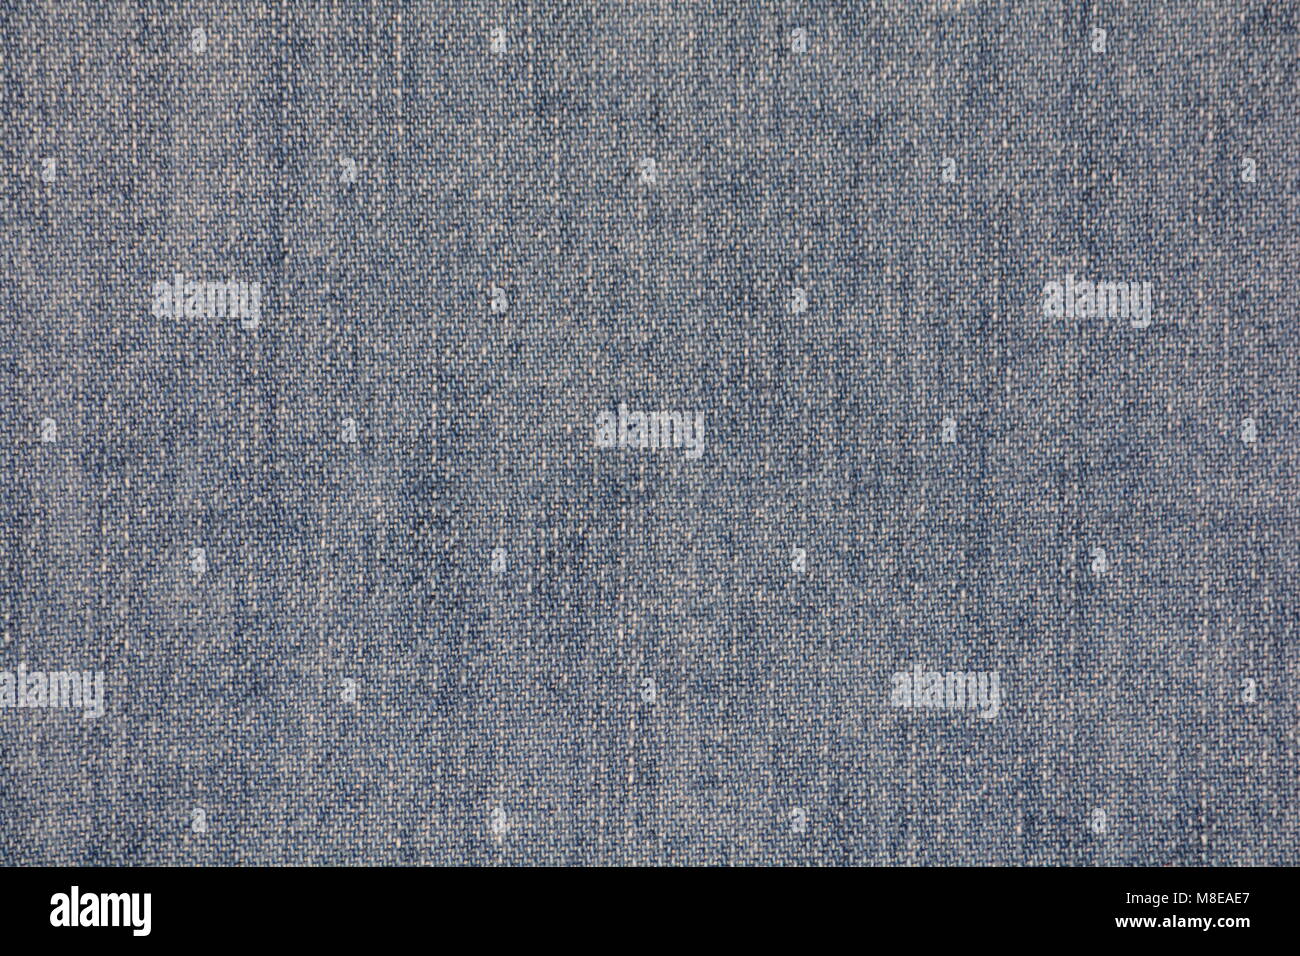 Fine blue jeans fabric, close-up Stock Photo